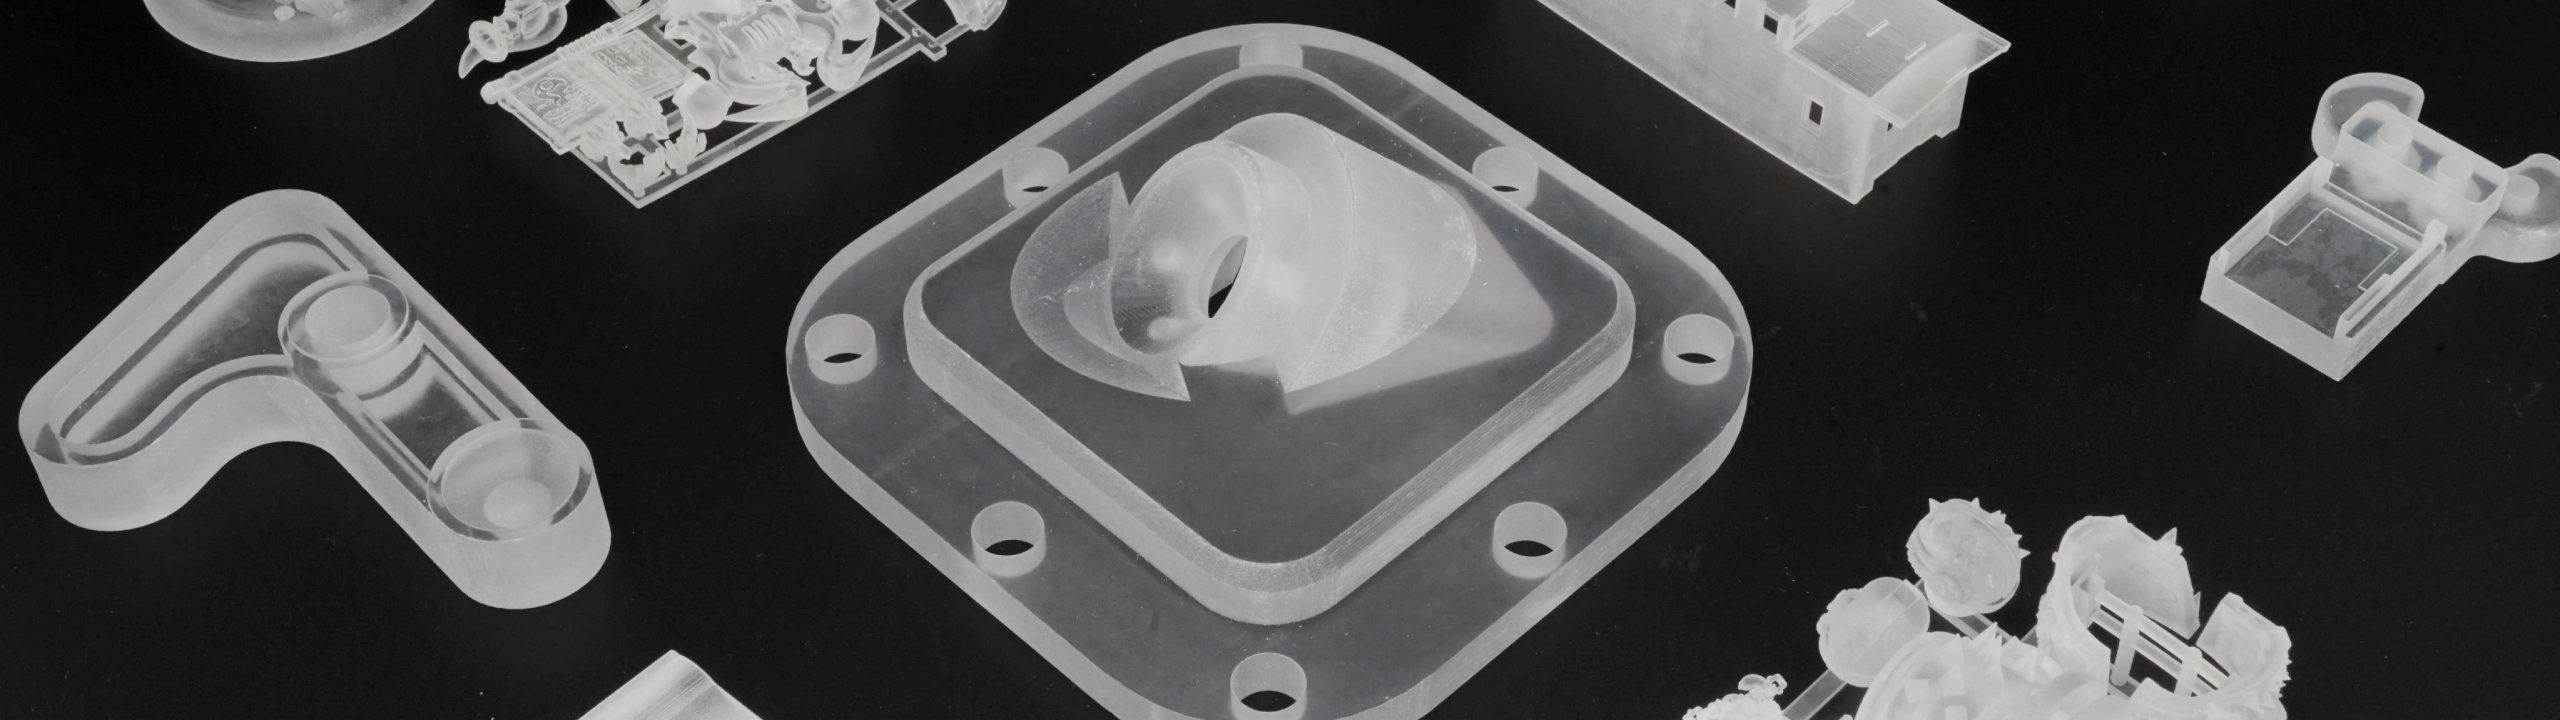 Fine Detail Plastic 3D Printing Material Information - Shapeways